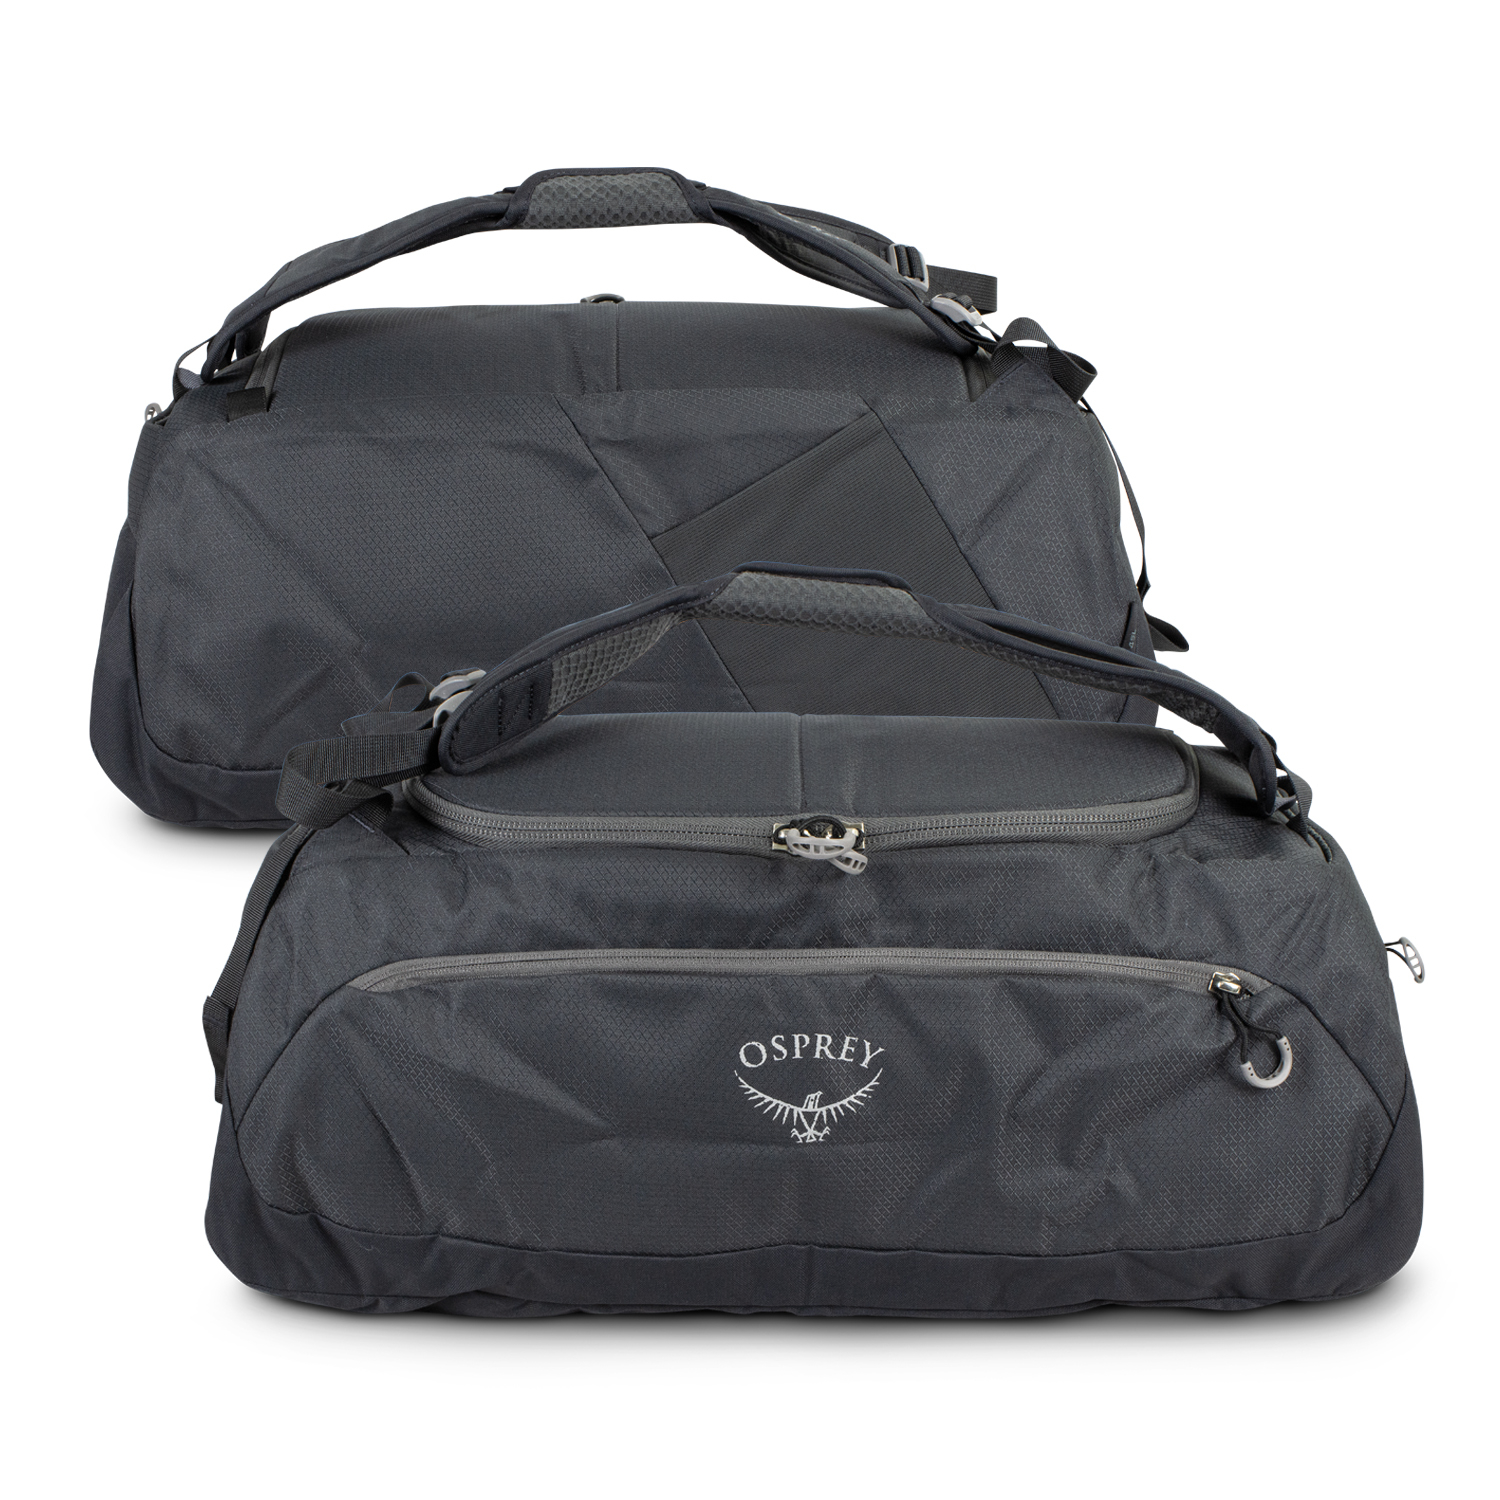 Duffle Bags Osprey Daylite Duffle Bag bag